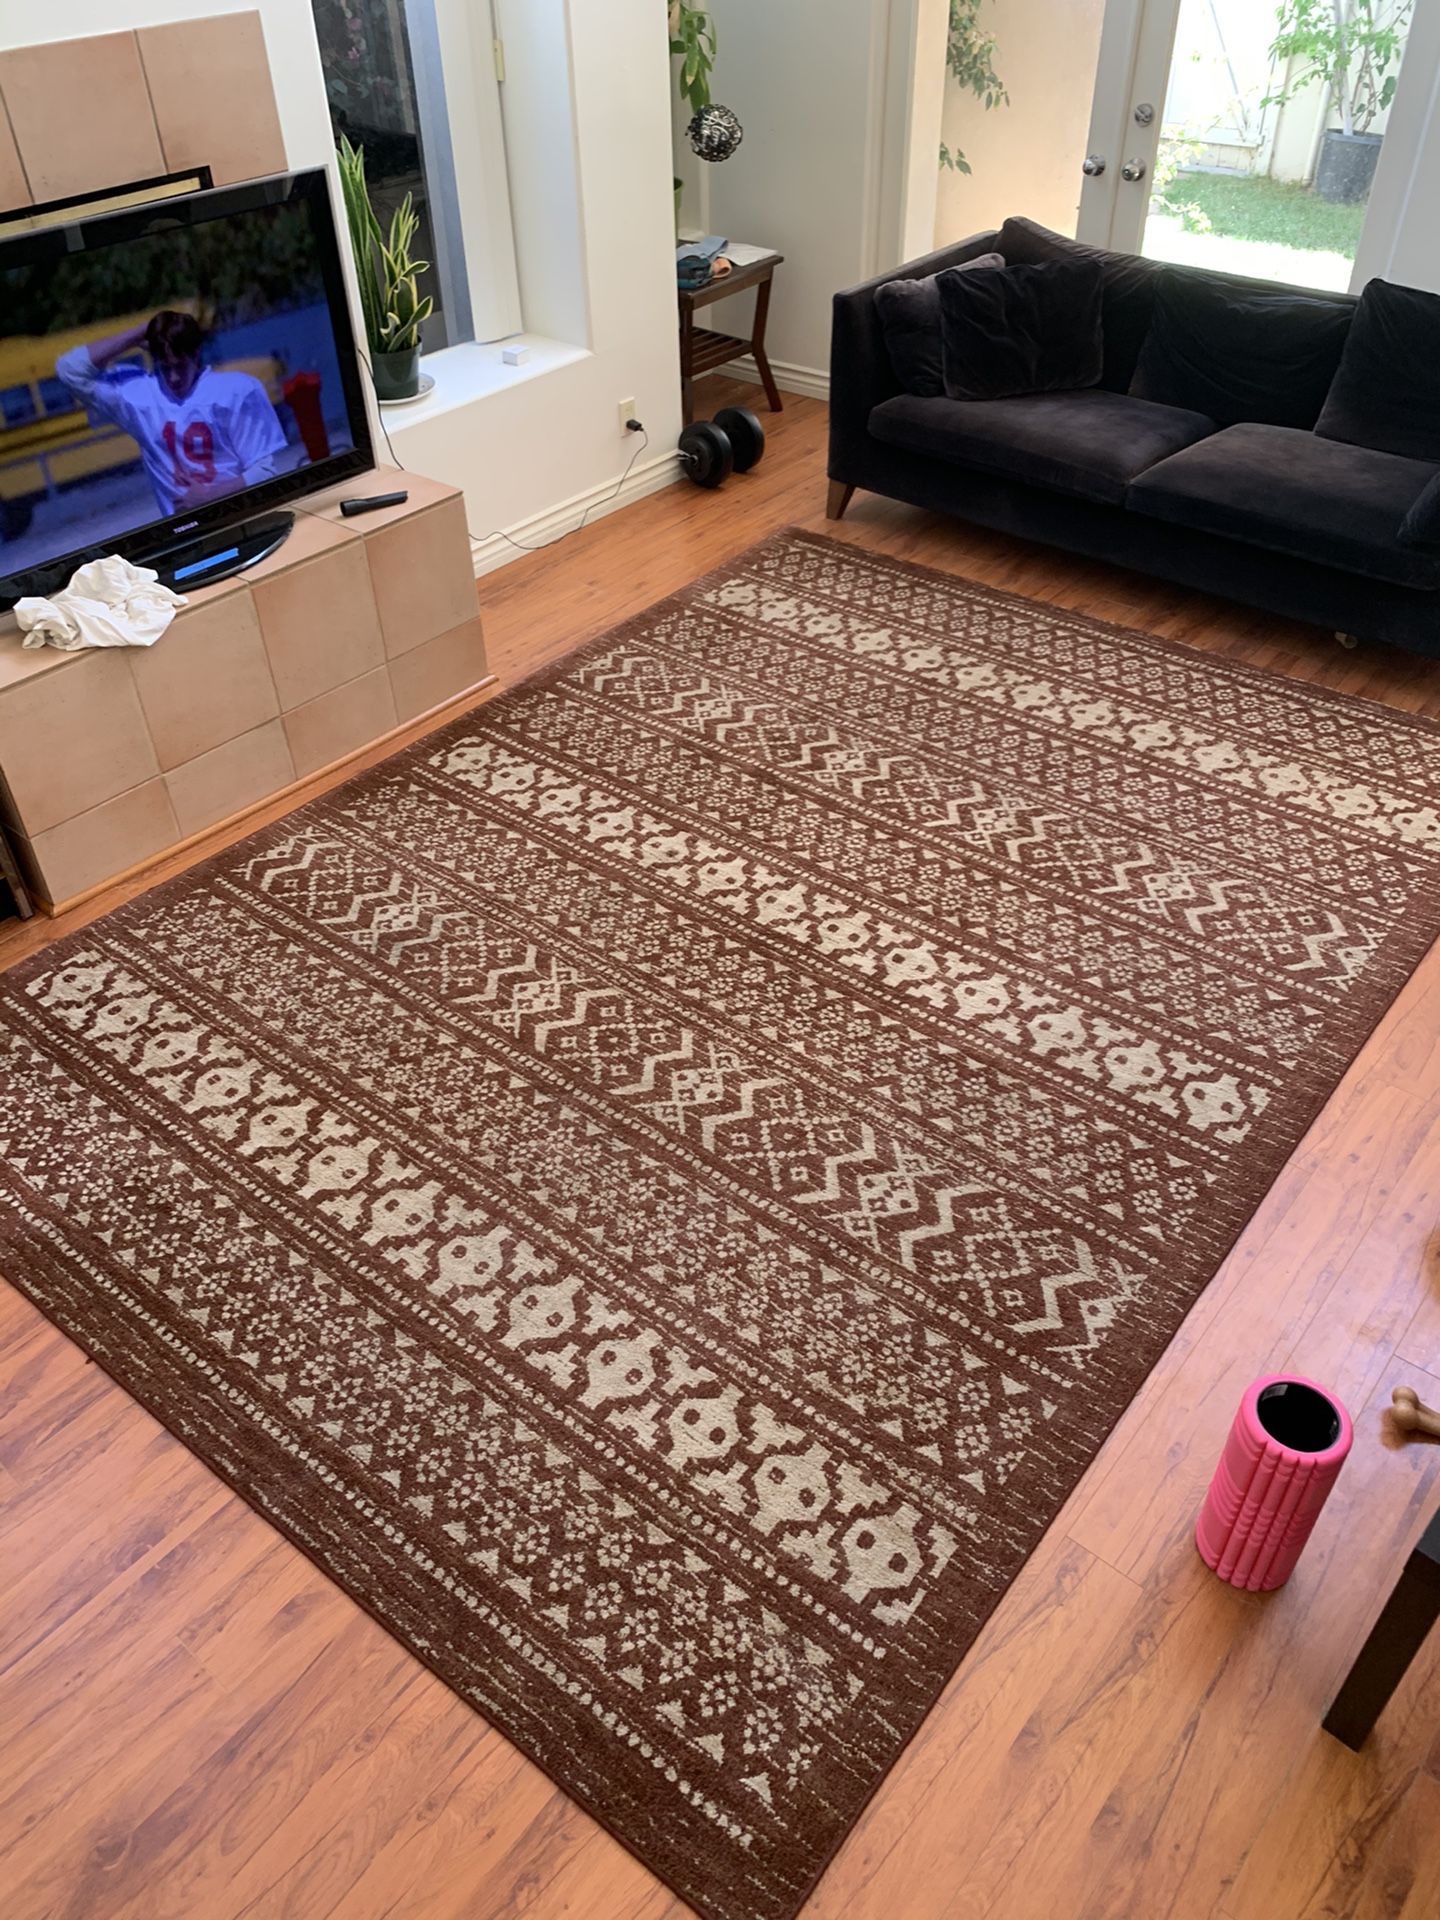 Large area rug!!